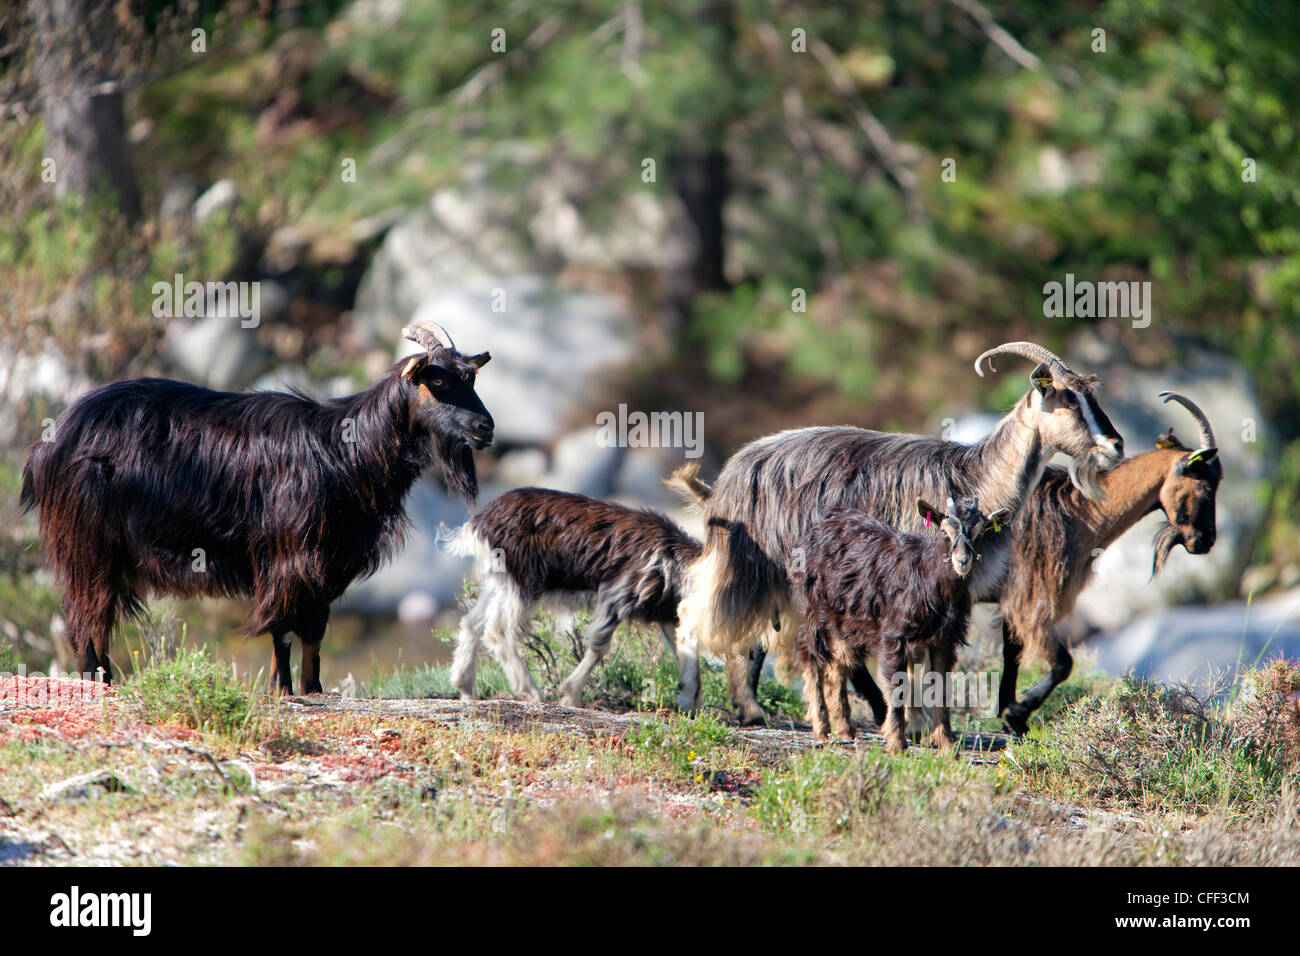 Goats on the Mare-a-Mare North trail, zwischen Alberta and Ciatterinu, Niolo Plateau, Corsica, France Stock Photo